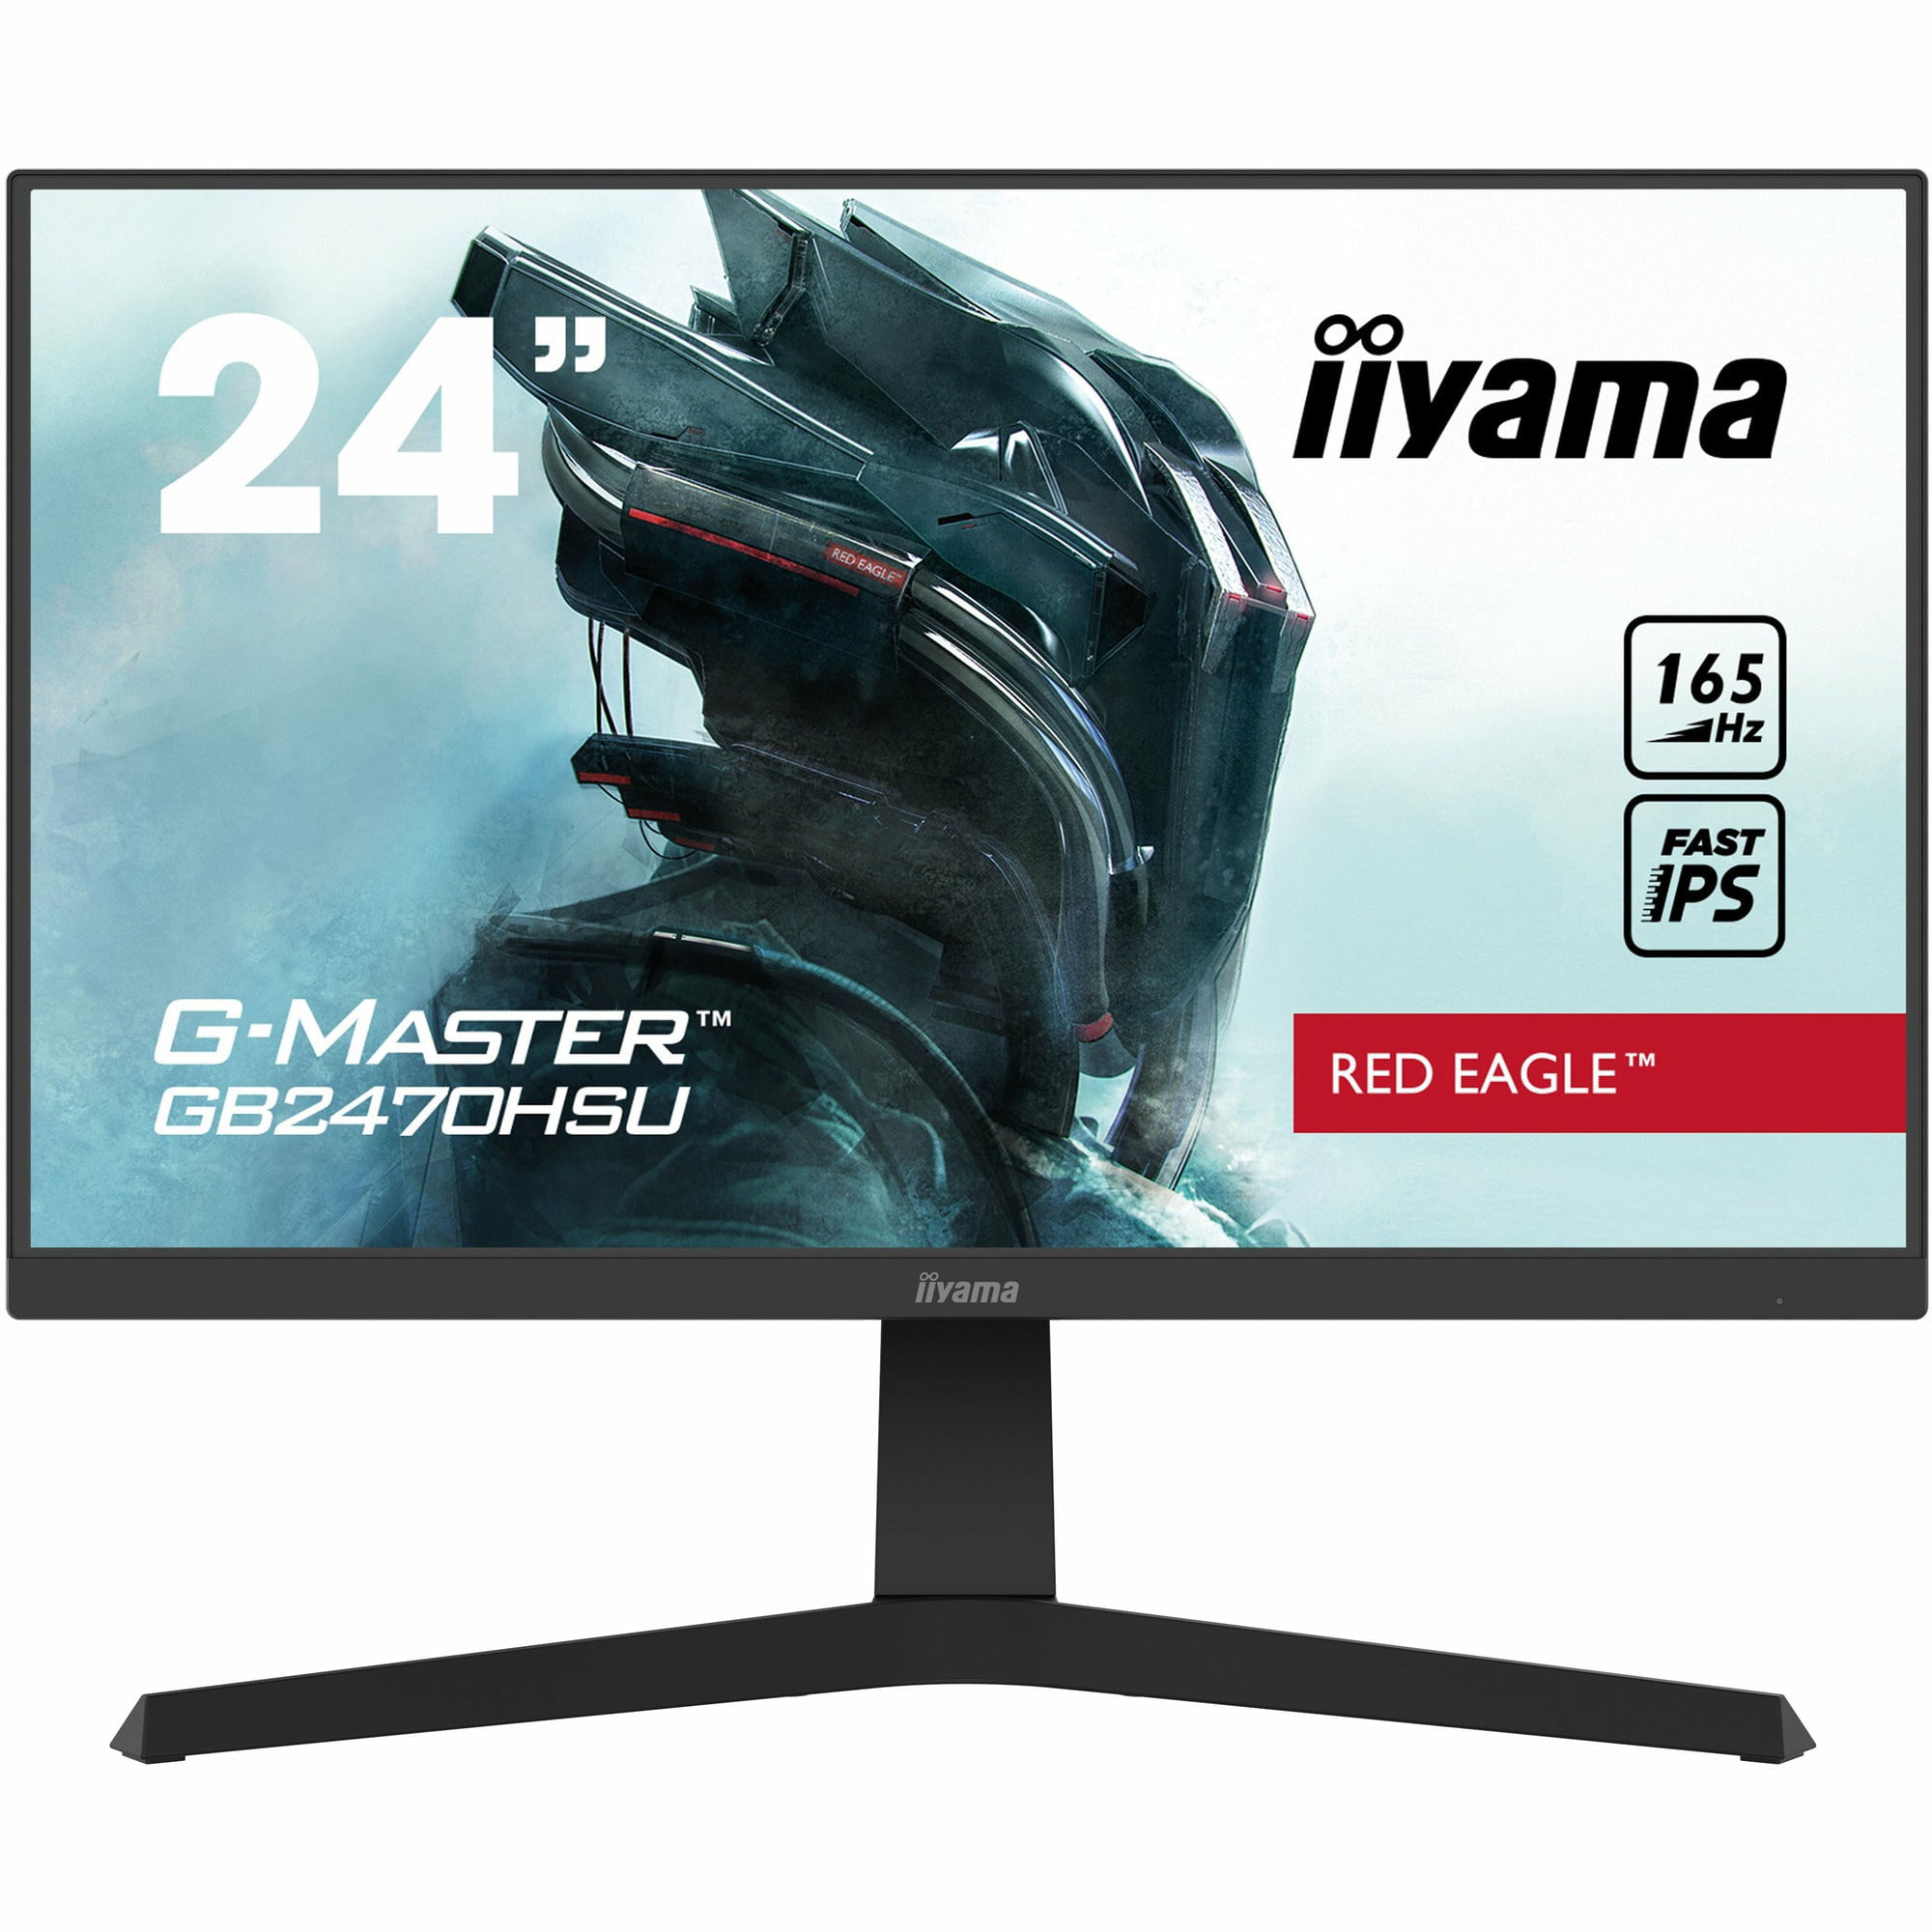 iiyama G-Master GB2470HSU-B1 24" 165Hz 0.8ms Adjust IPS Display - Walmart.com